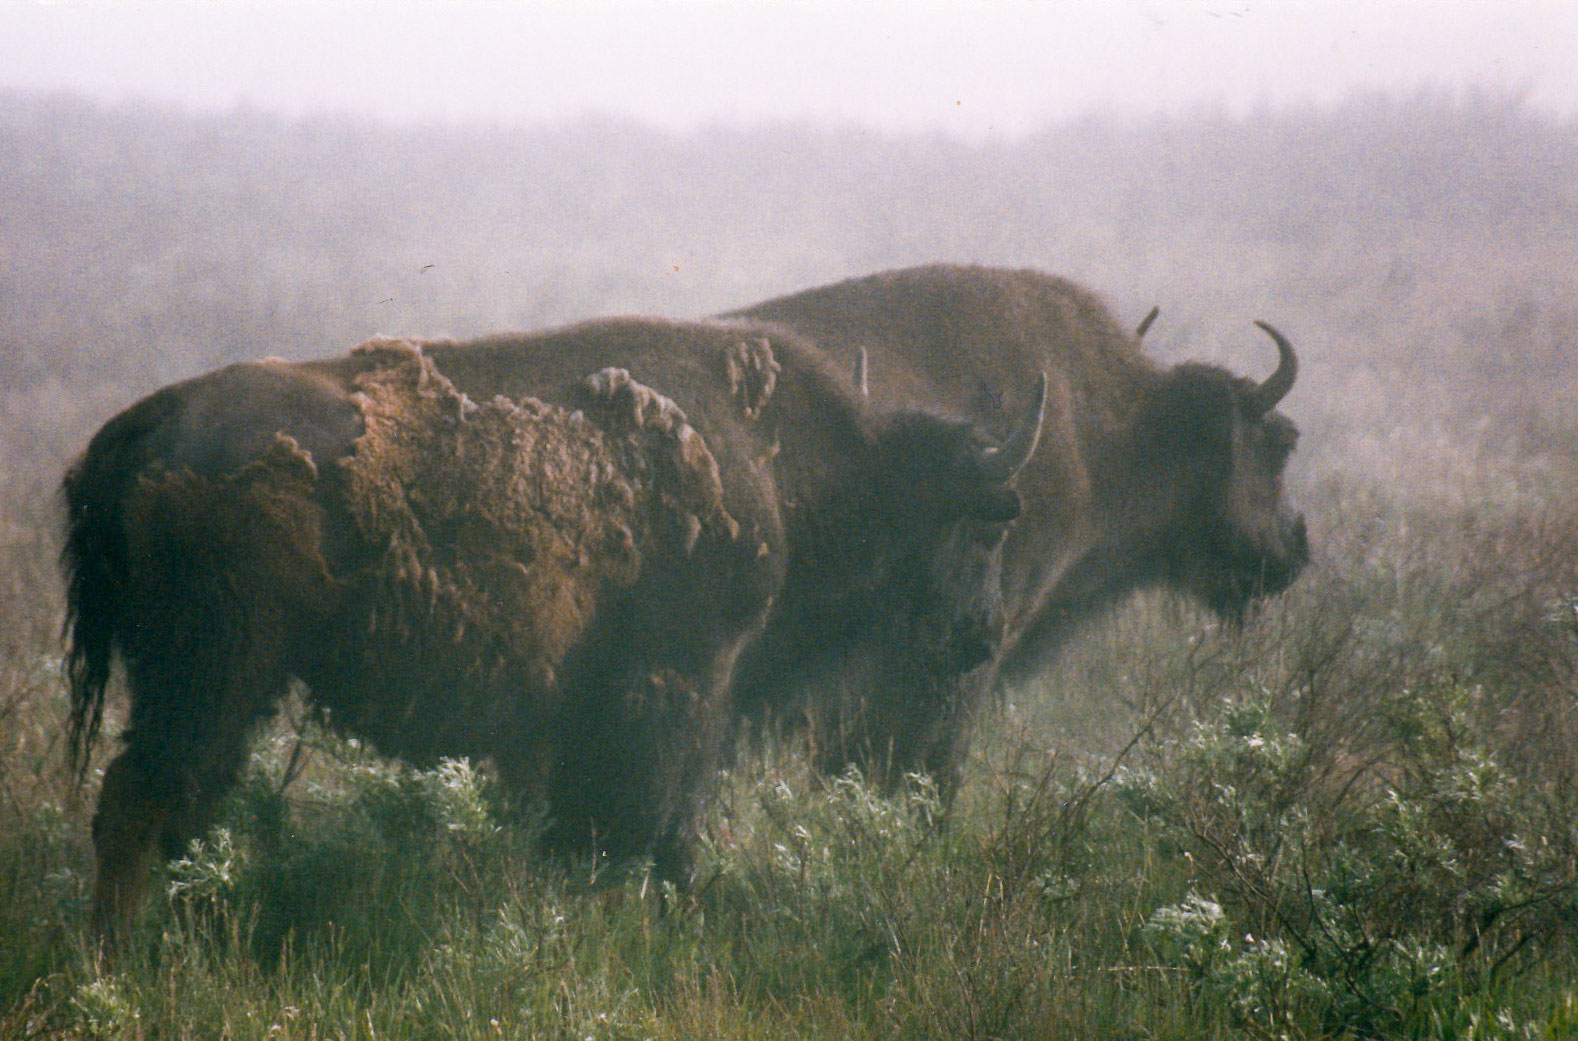 Bison, Bison bison, at dawn, Yellowstone NP, 1993